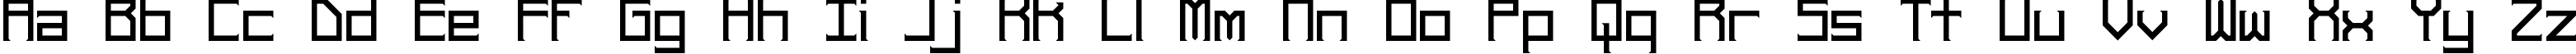 Пример написания английского алфавита шрифтом Rehearsal Point BRK